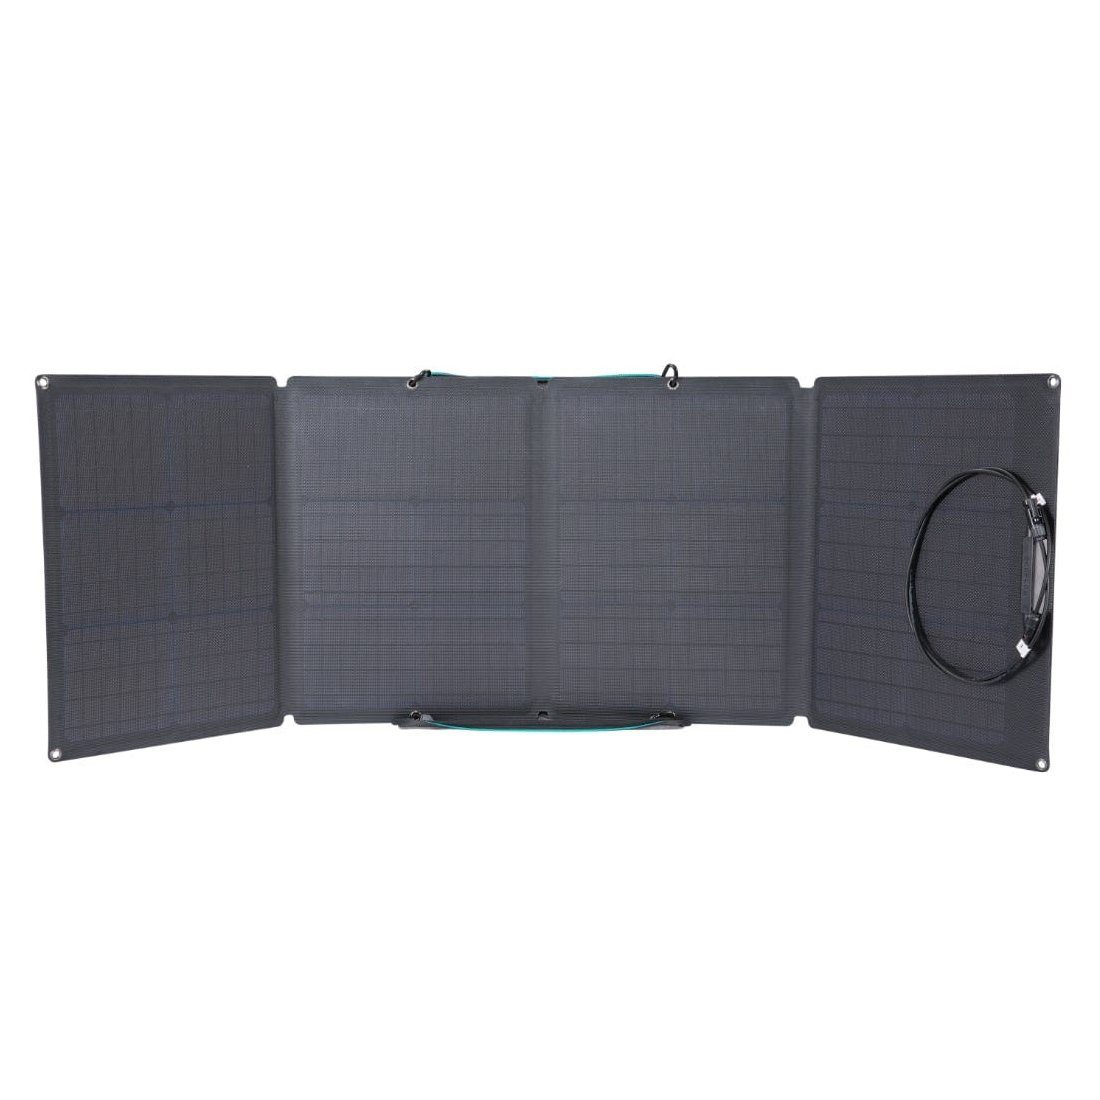 Ecoflow Panel Smart-Home-Station Ecoflow 110W Solar